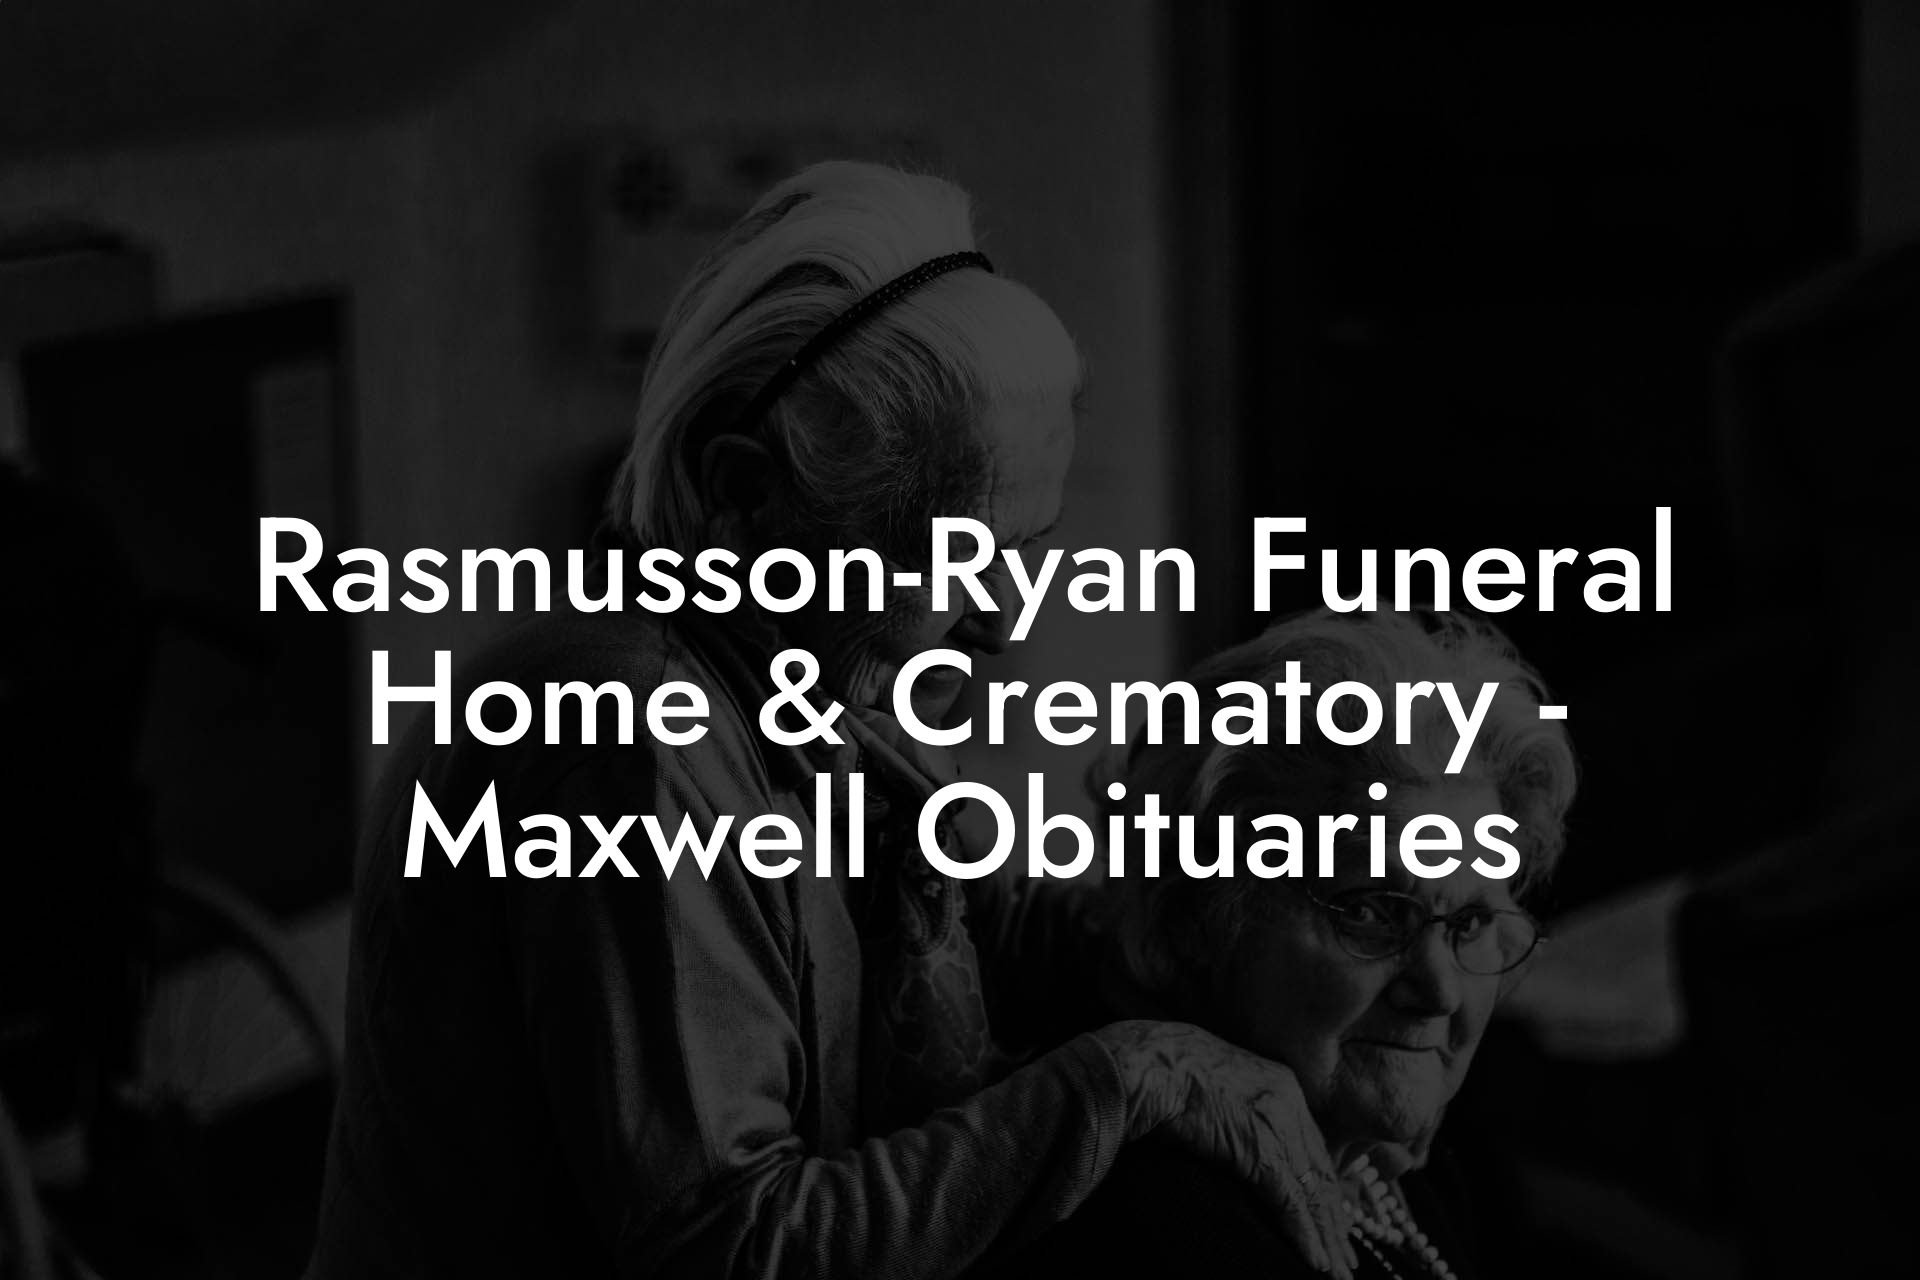 Rasmusson-Ryan Funeral Home & Crematory - Maxwell Obituaries